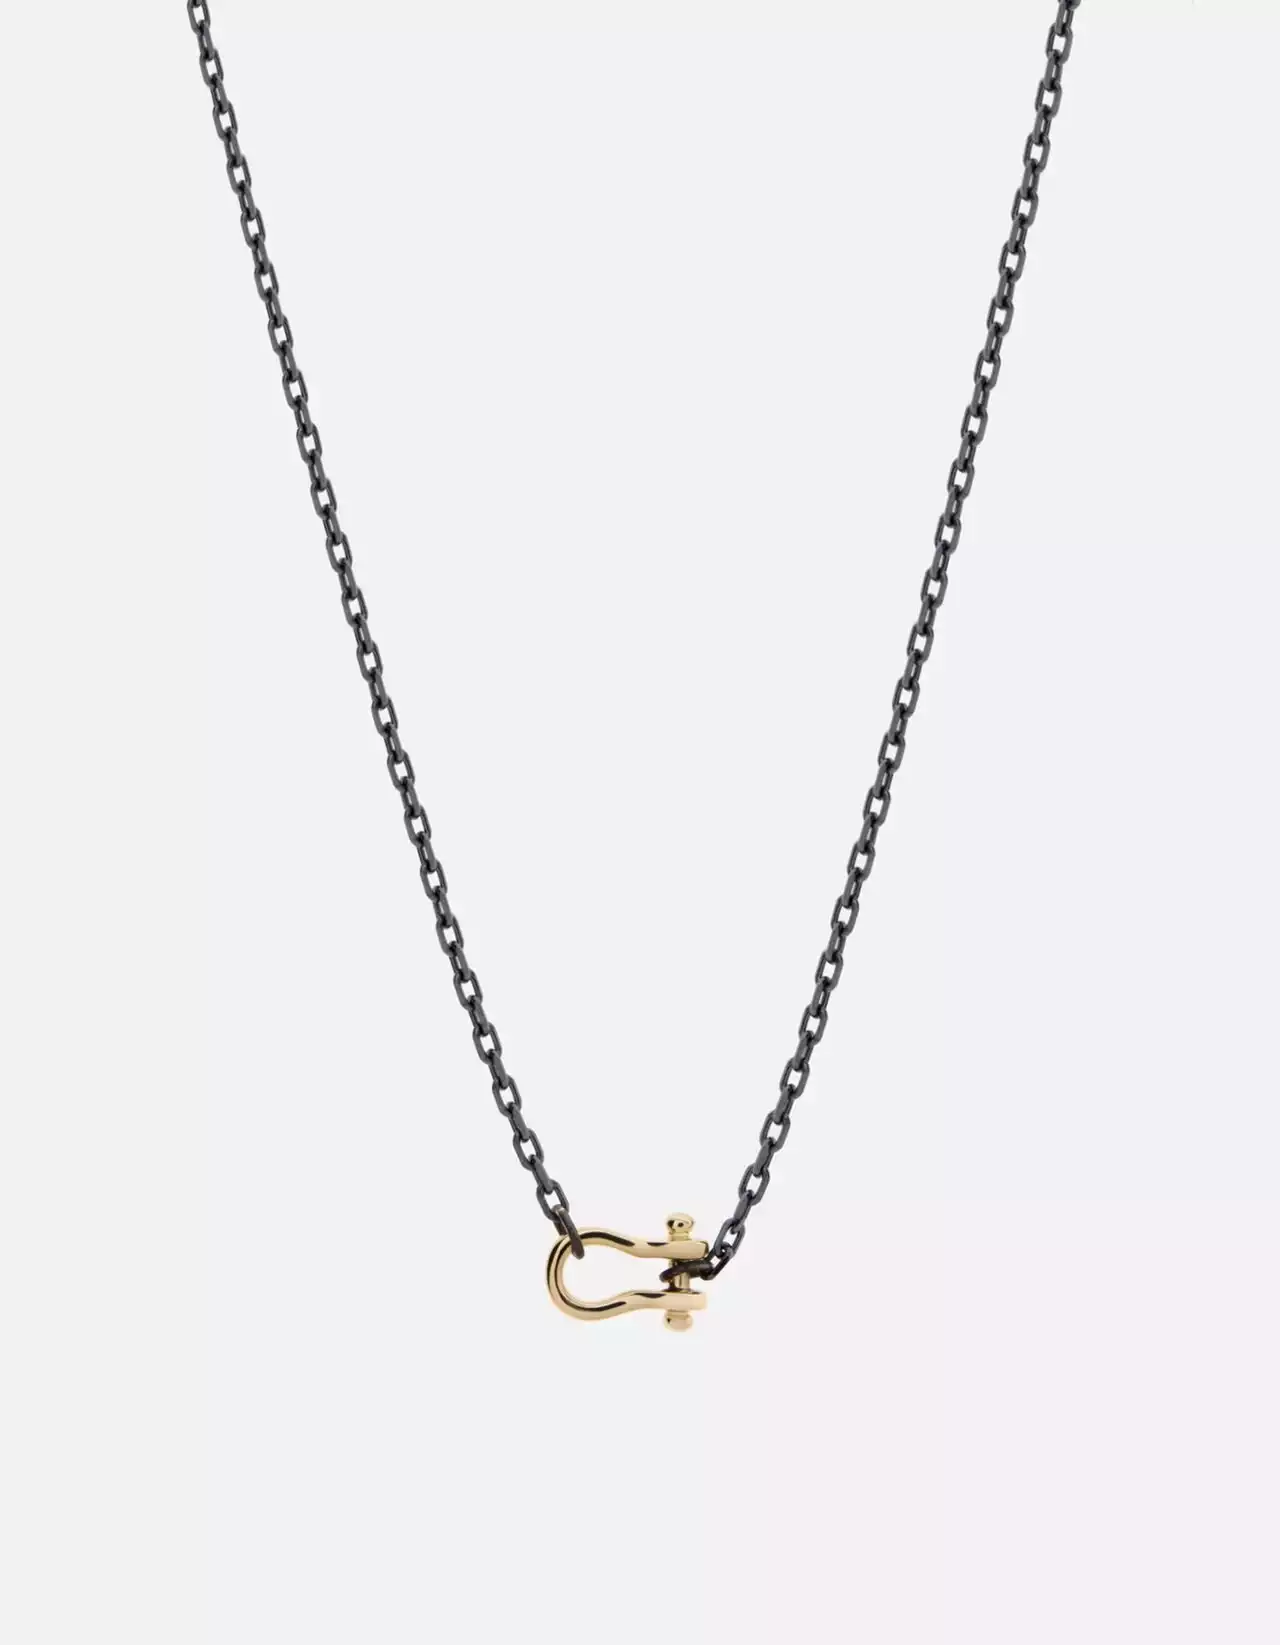 Miansai 1.7mm Cable Chain Necklace